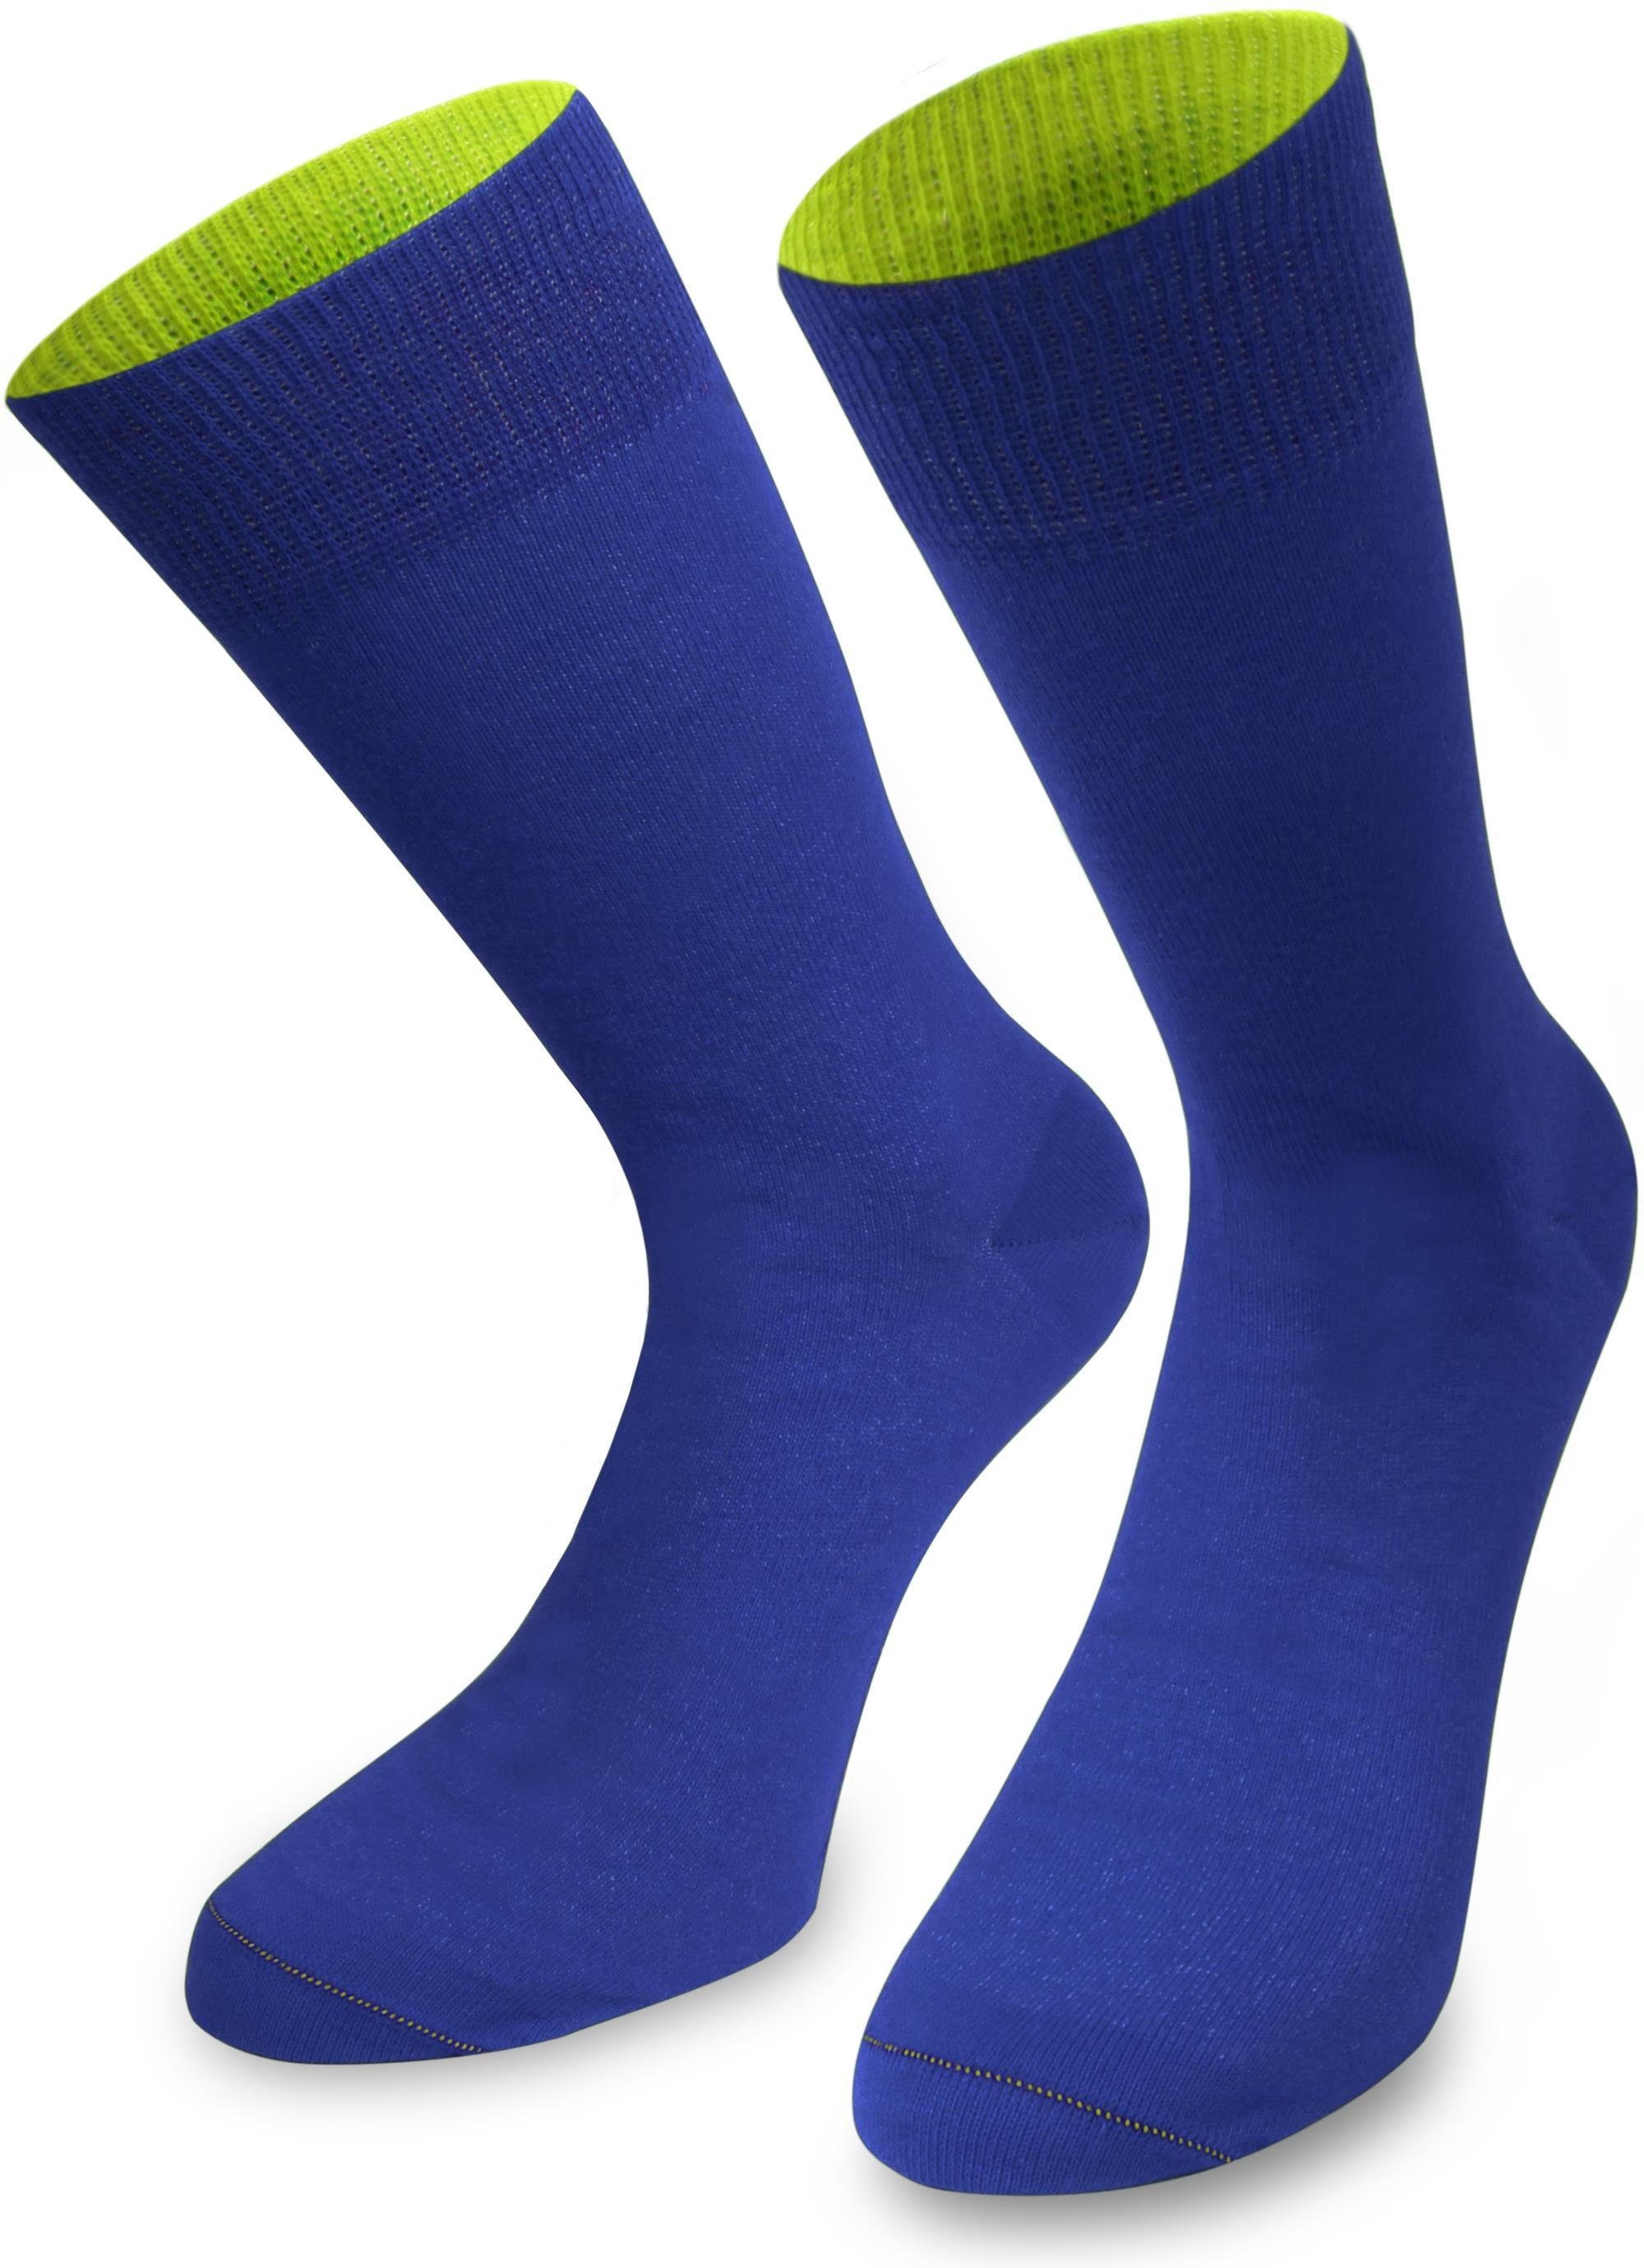 Basicsocken Bi-Color Socken Paar normani 1 Paar) (1 abgesetzter farbig Royalblau/Säuregelb Bund